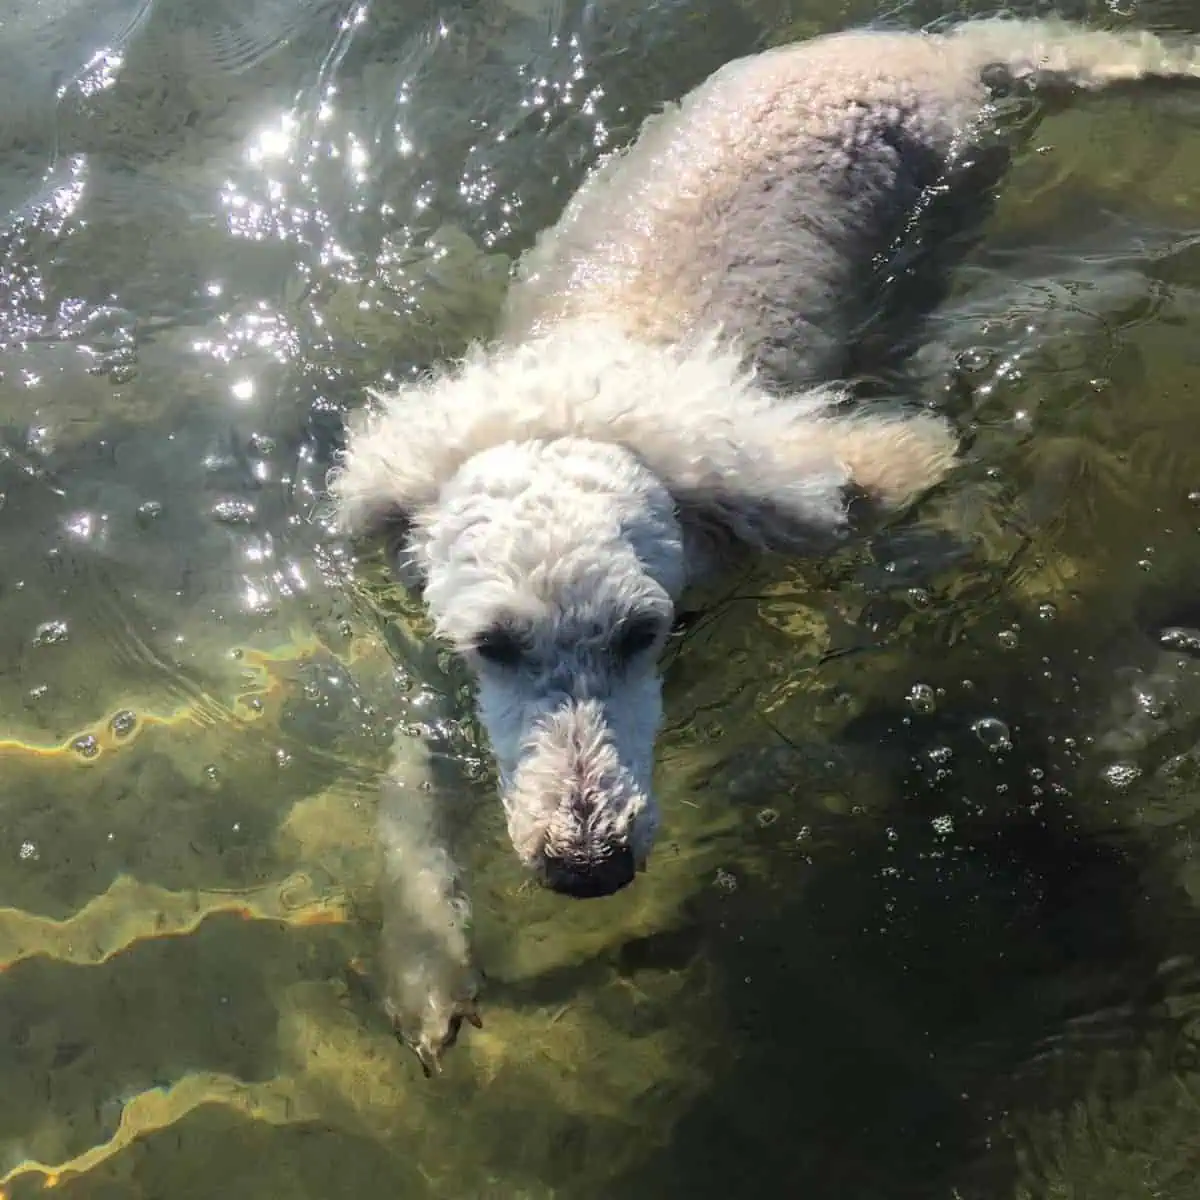 hyper Poodle loves swimming regularly